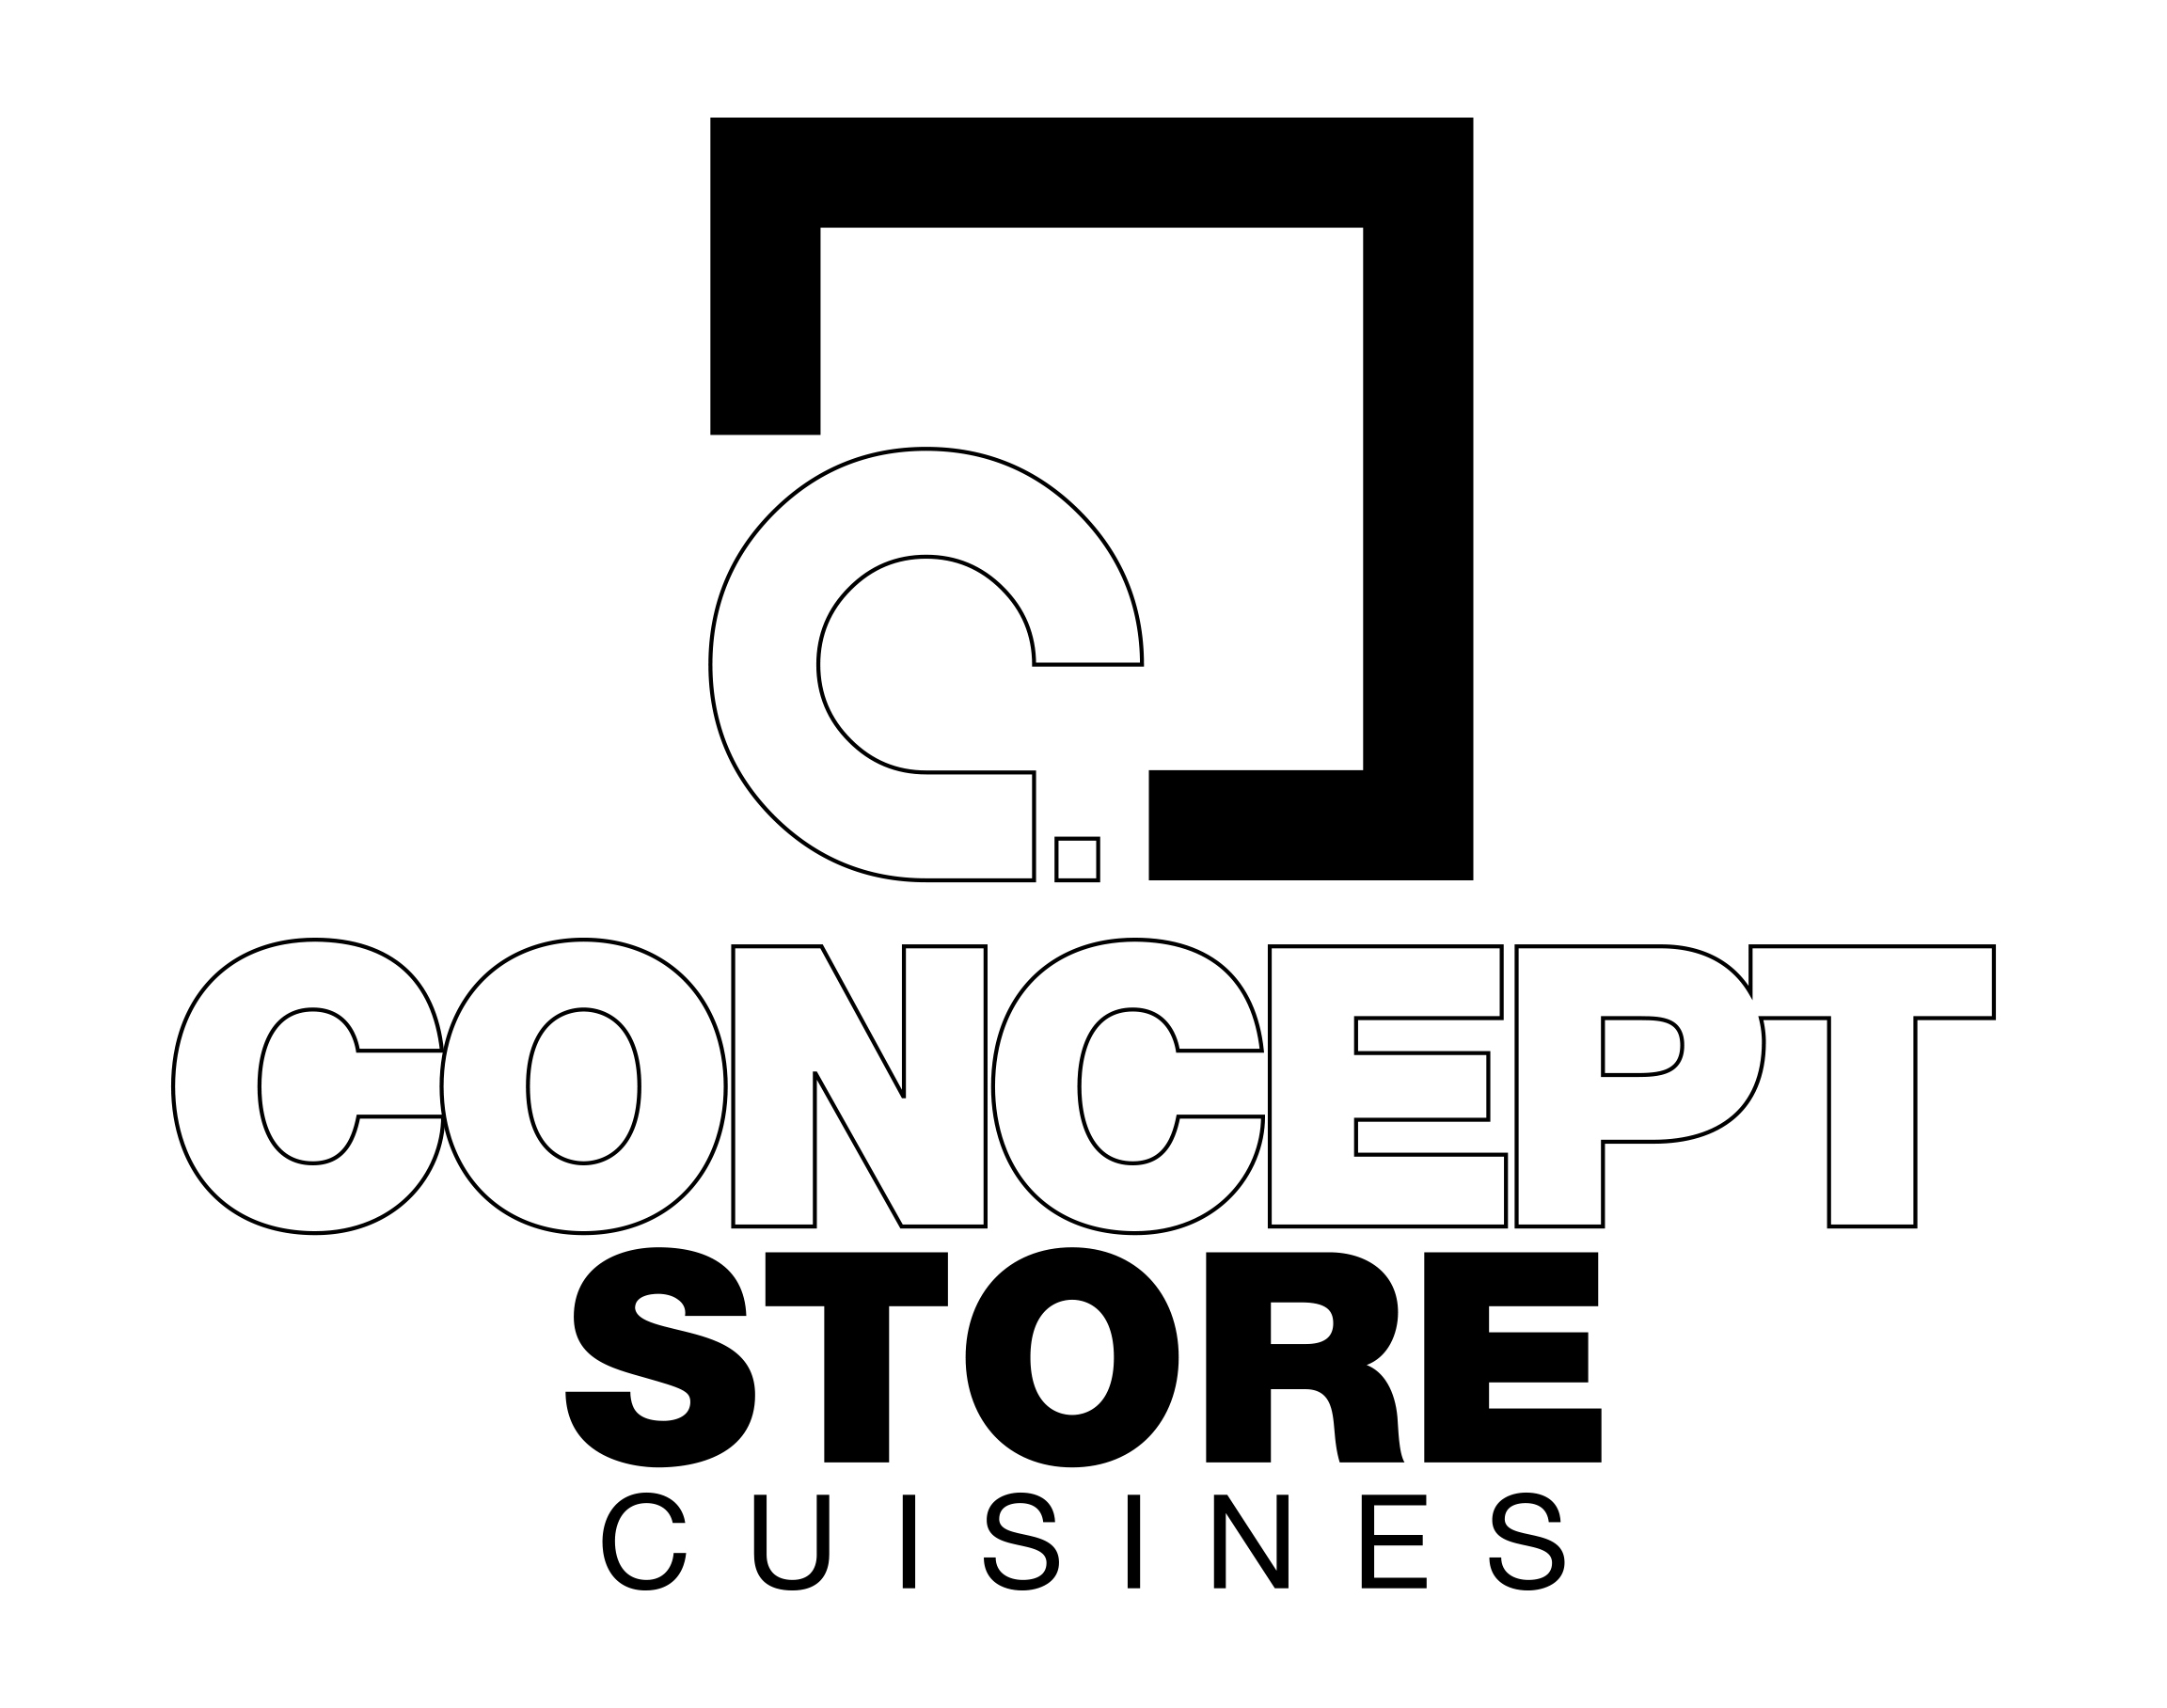 Concept Store Cuisines